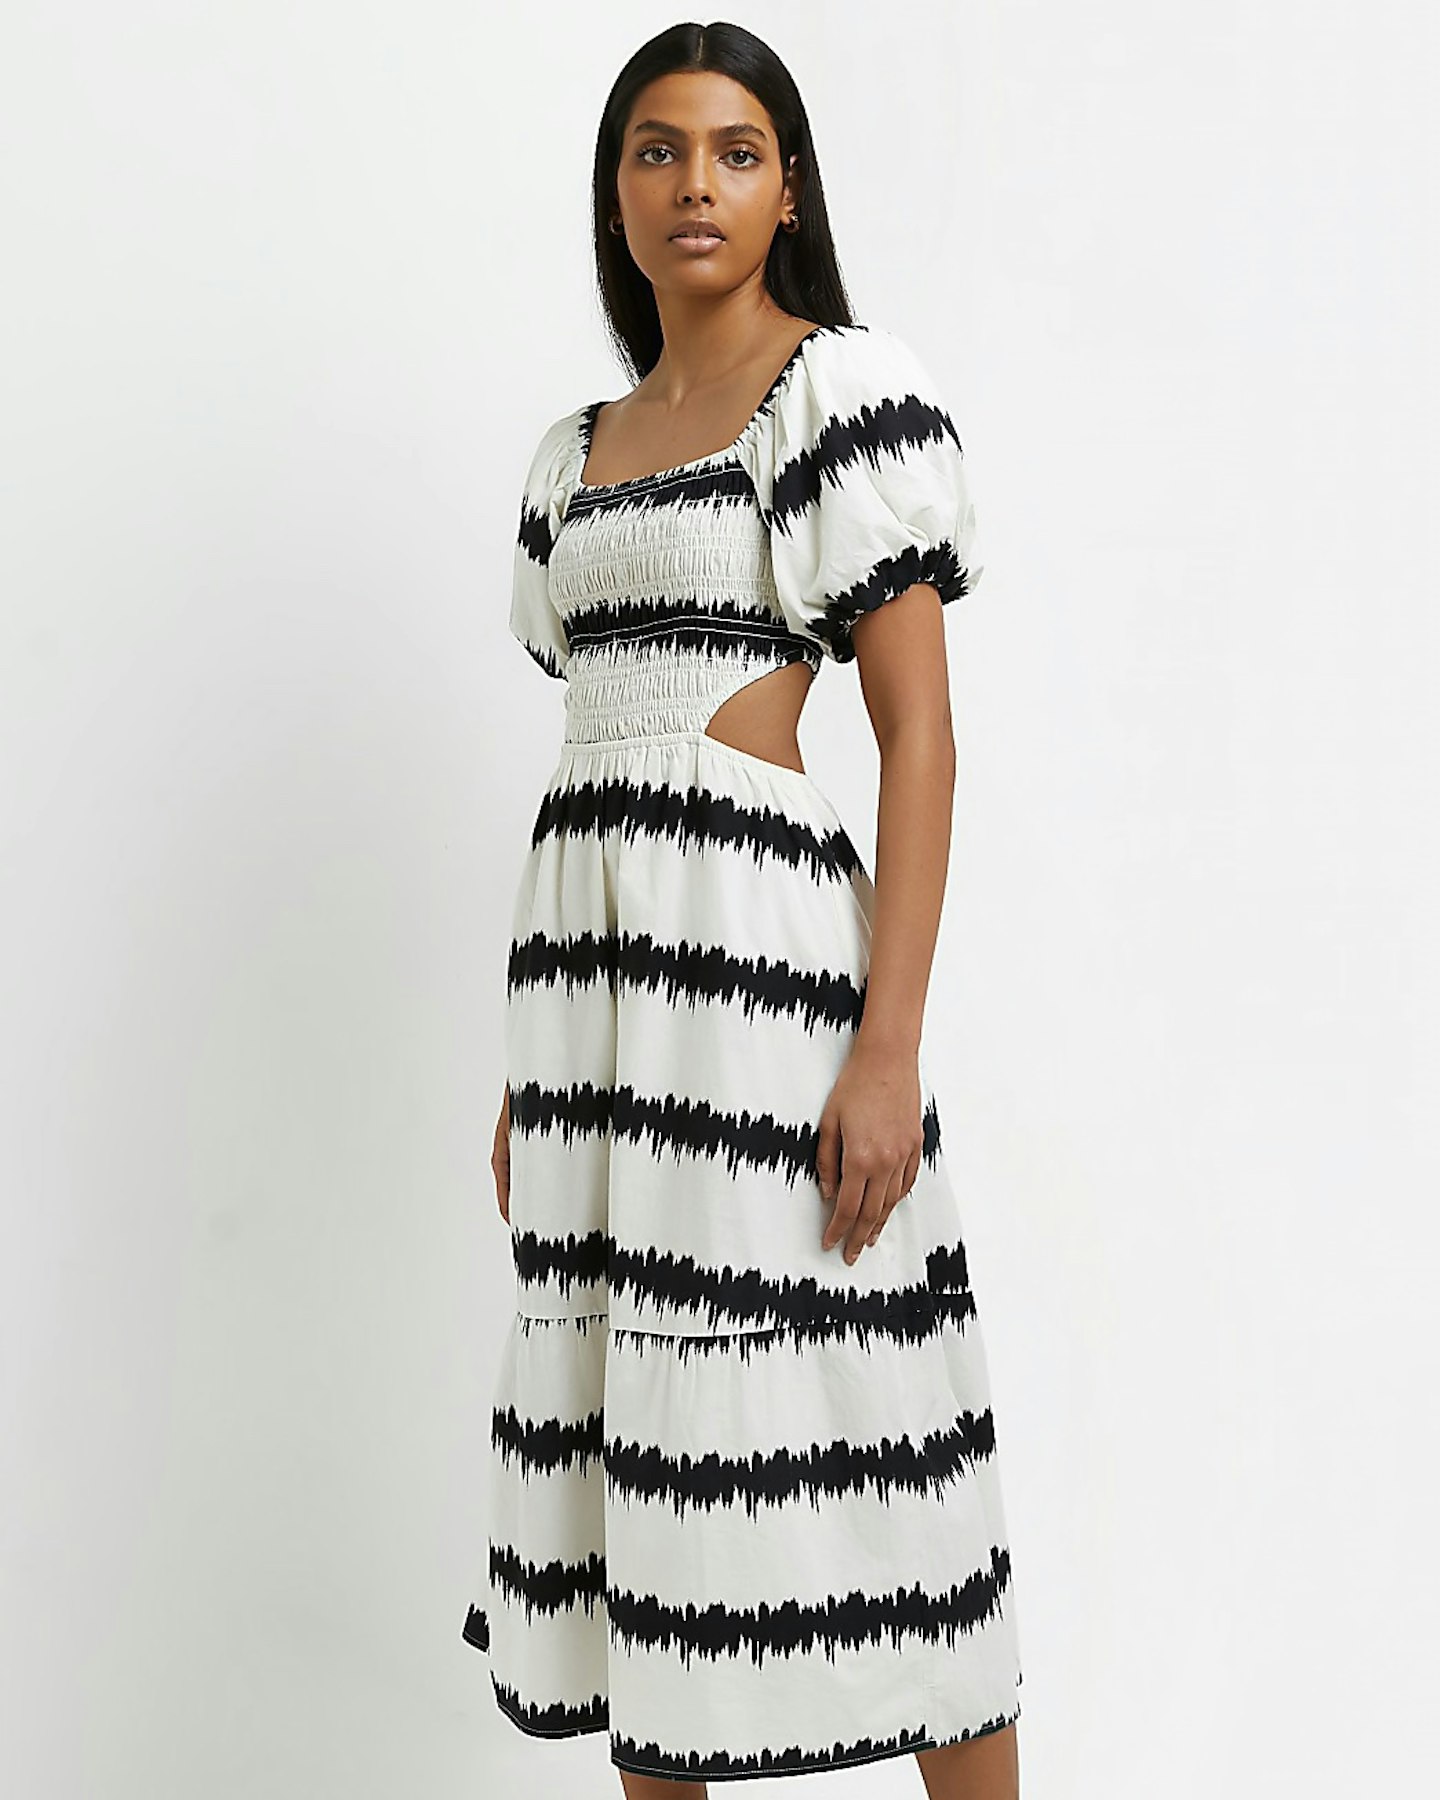 river island best buys Black Striped Smock Midi Dress, £42